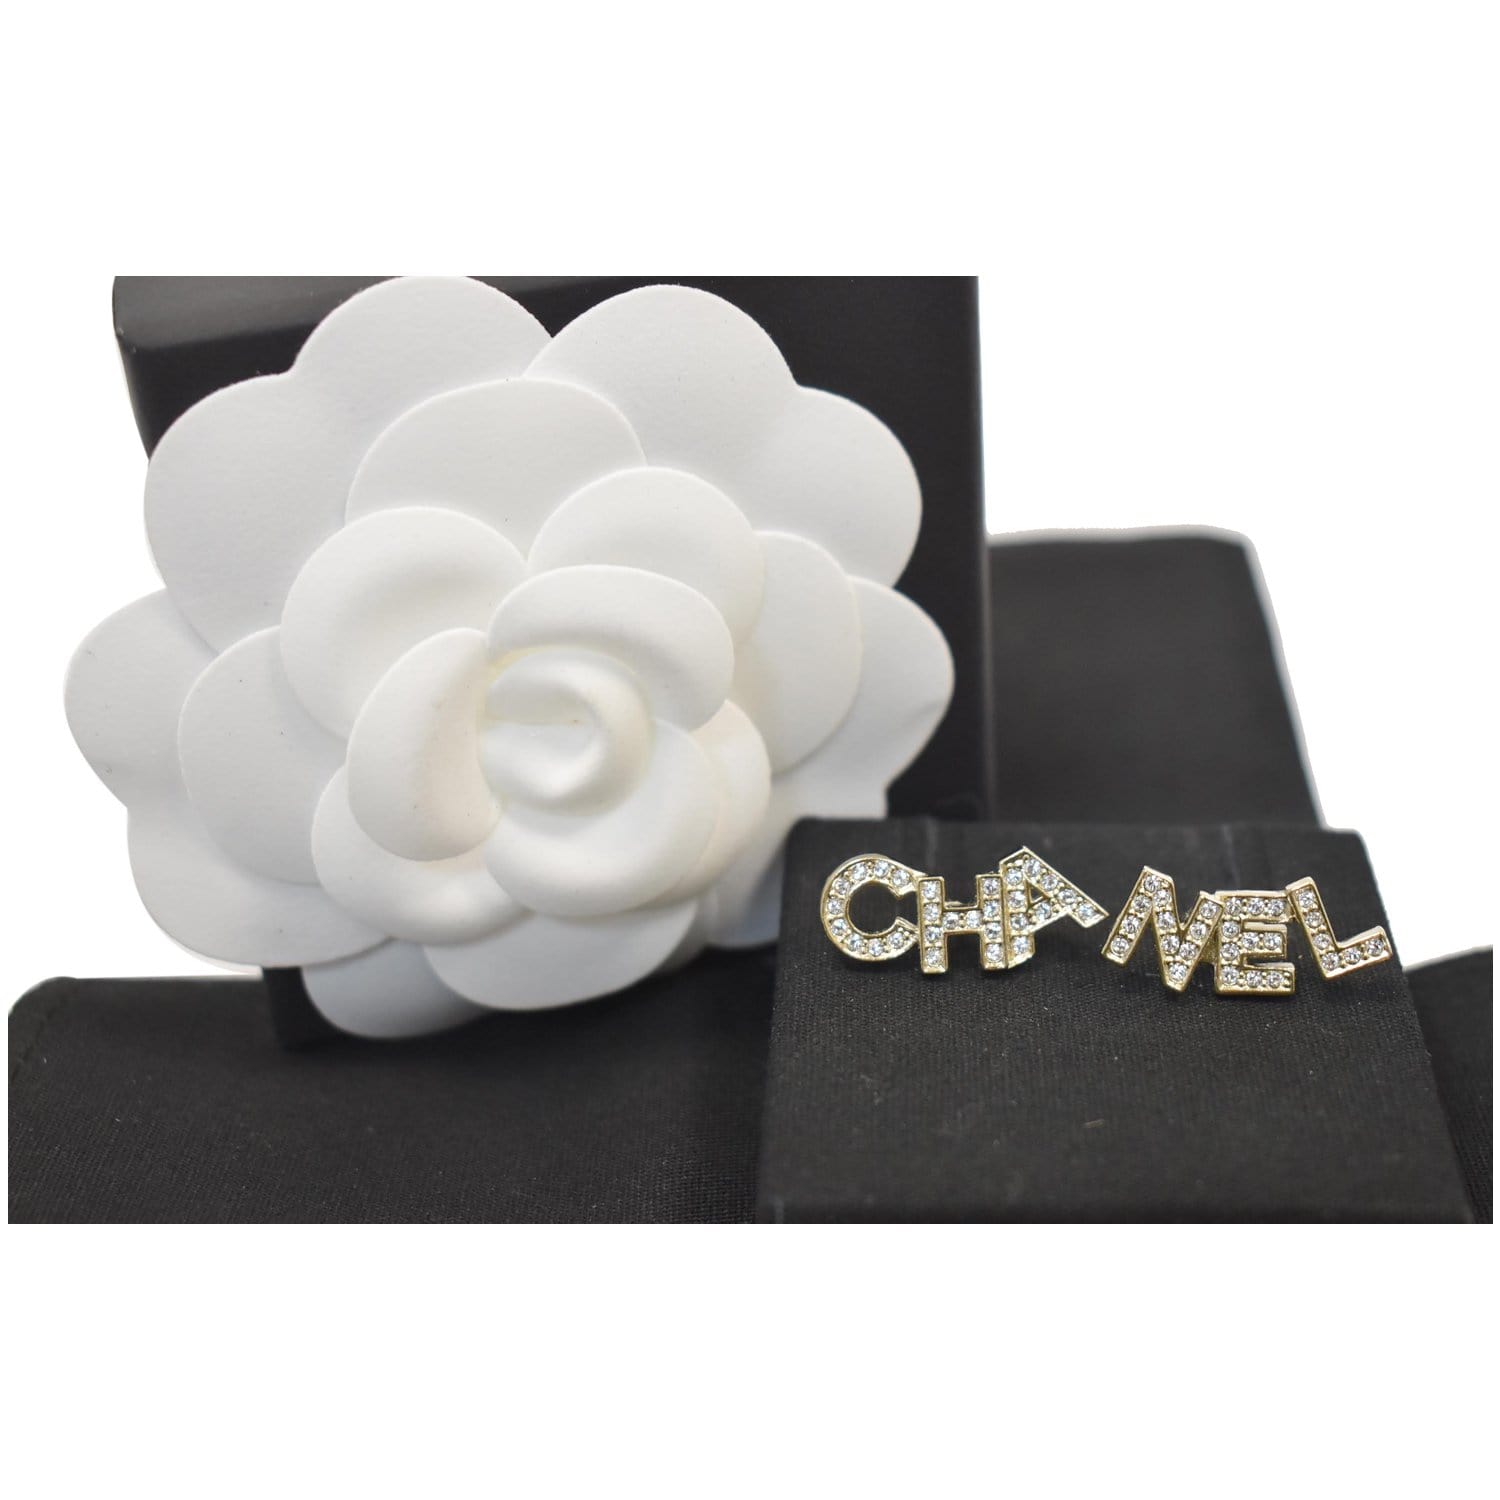 NWT Chanel RUNWAY CHA NEL Letter Logo Crystal Statement Earrings w